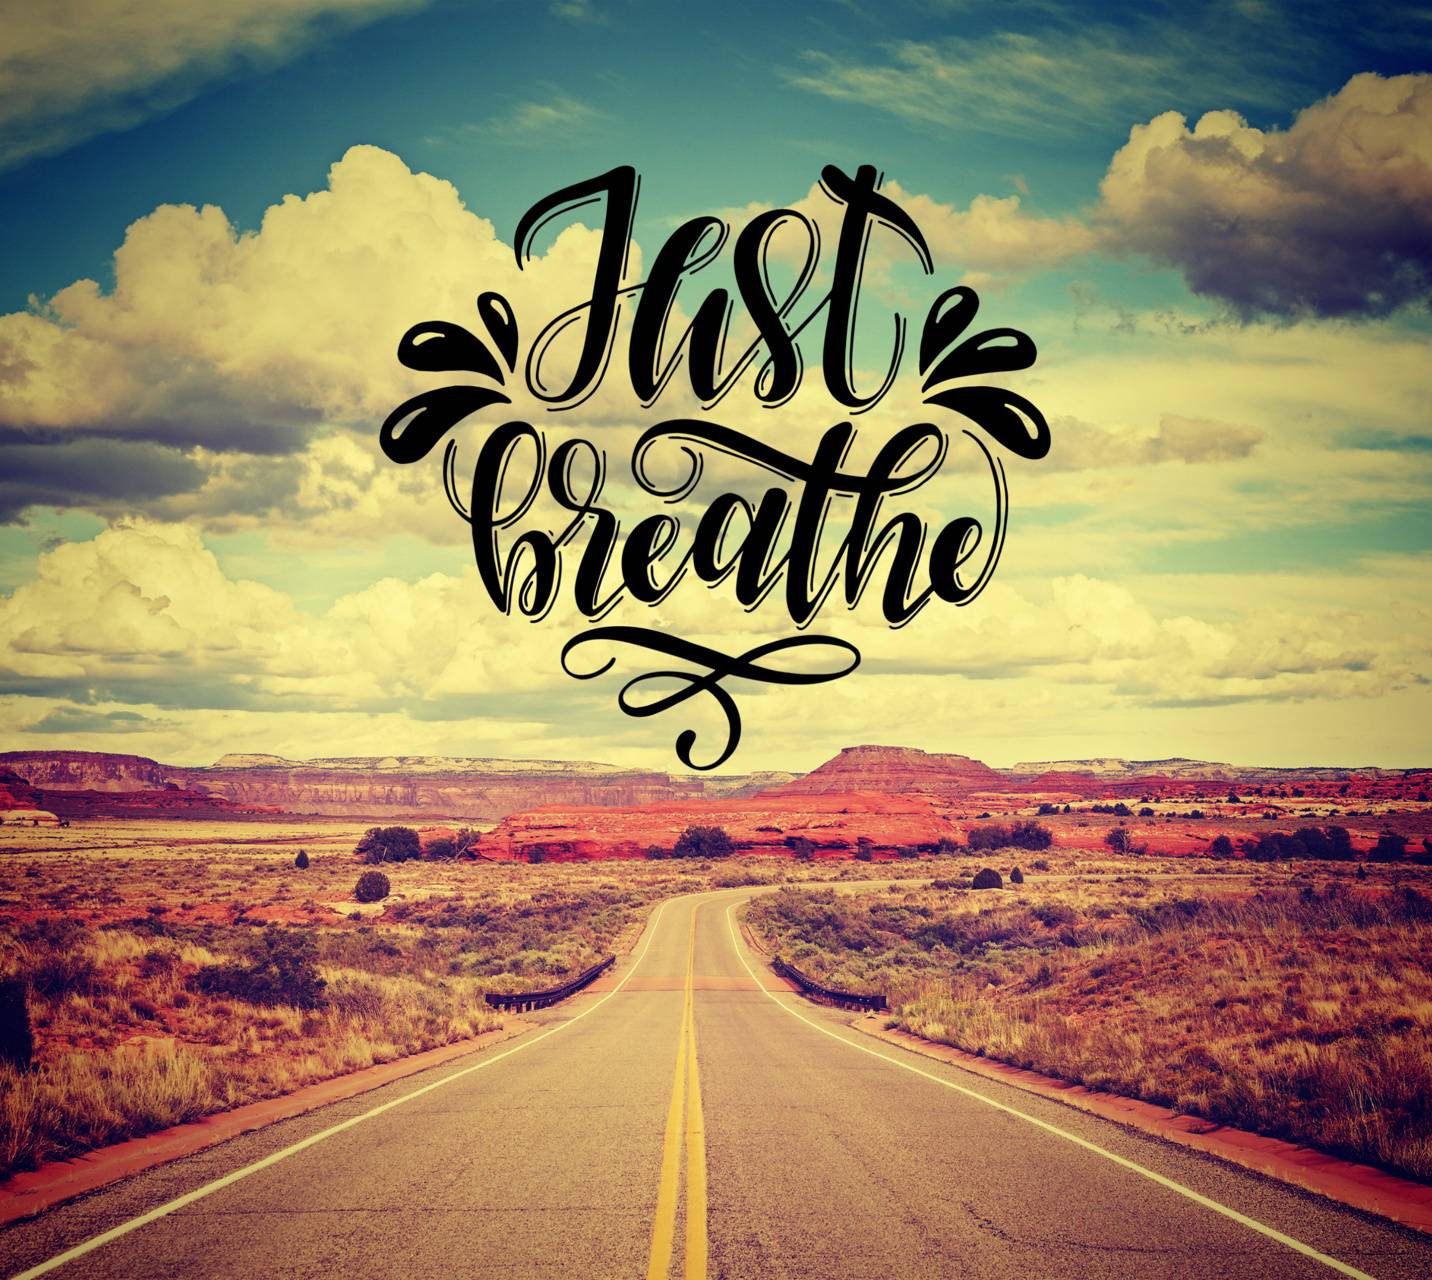 Just Breathe wallpaper